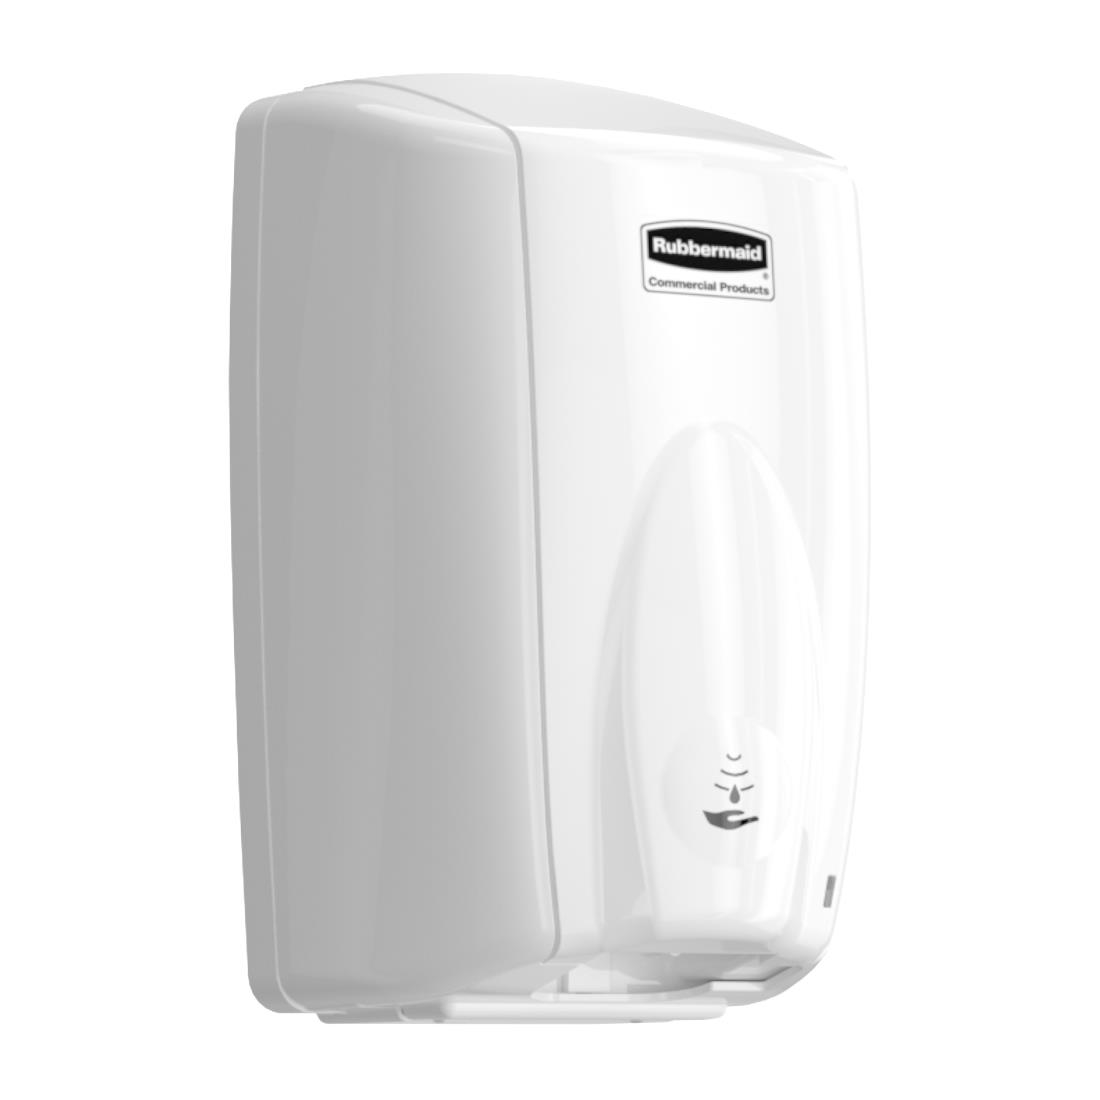 Rubbermaid AutoFoam Touch-Free Foam Hand Soap and Sanitiser Dispenser 500ml